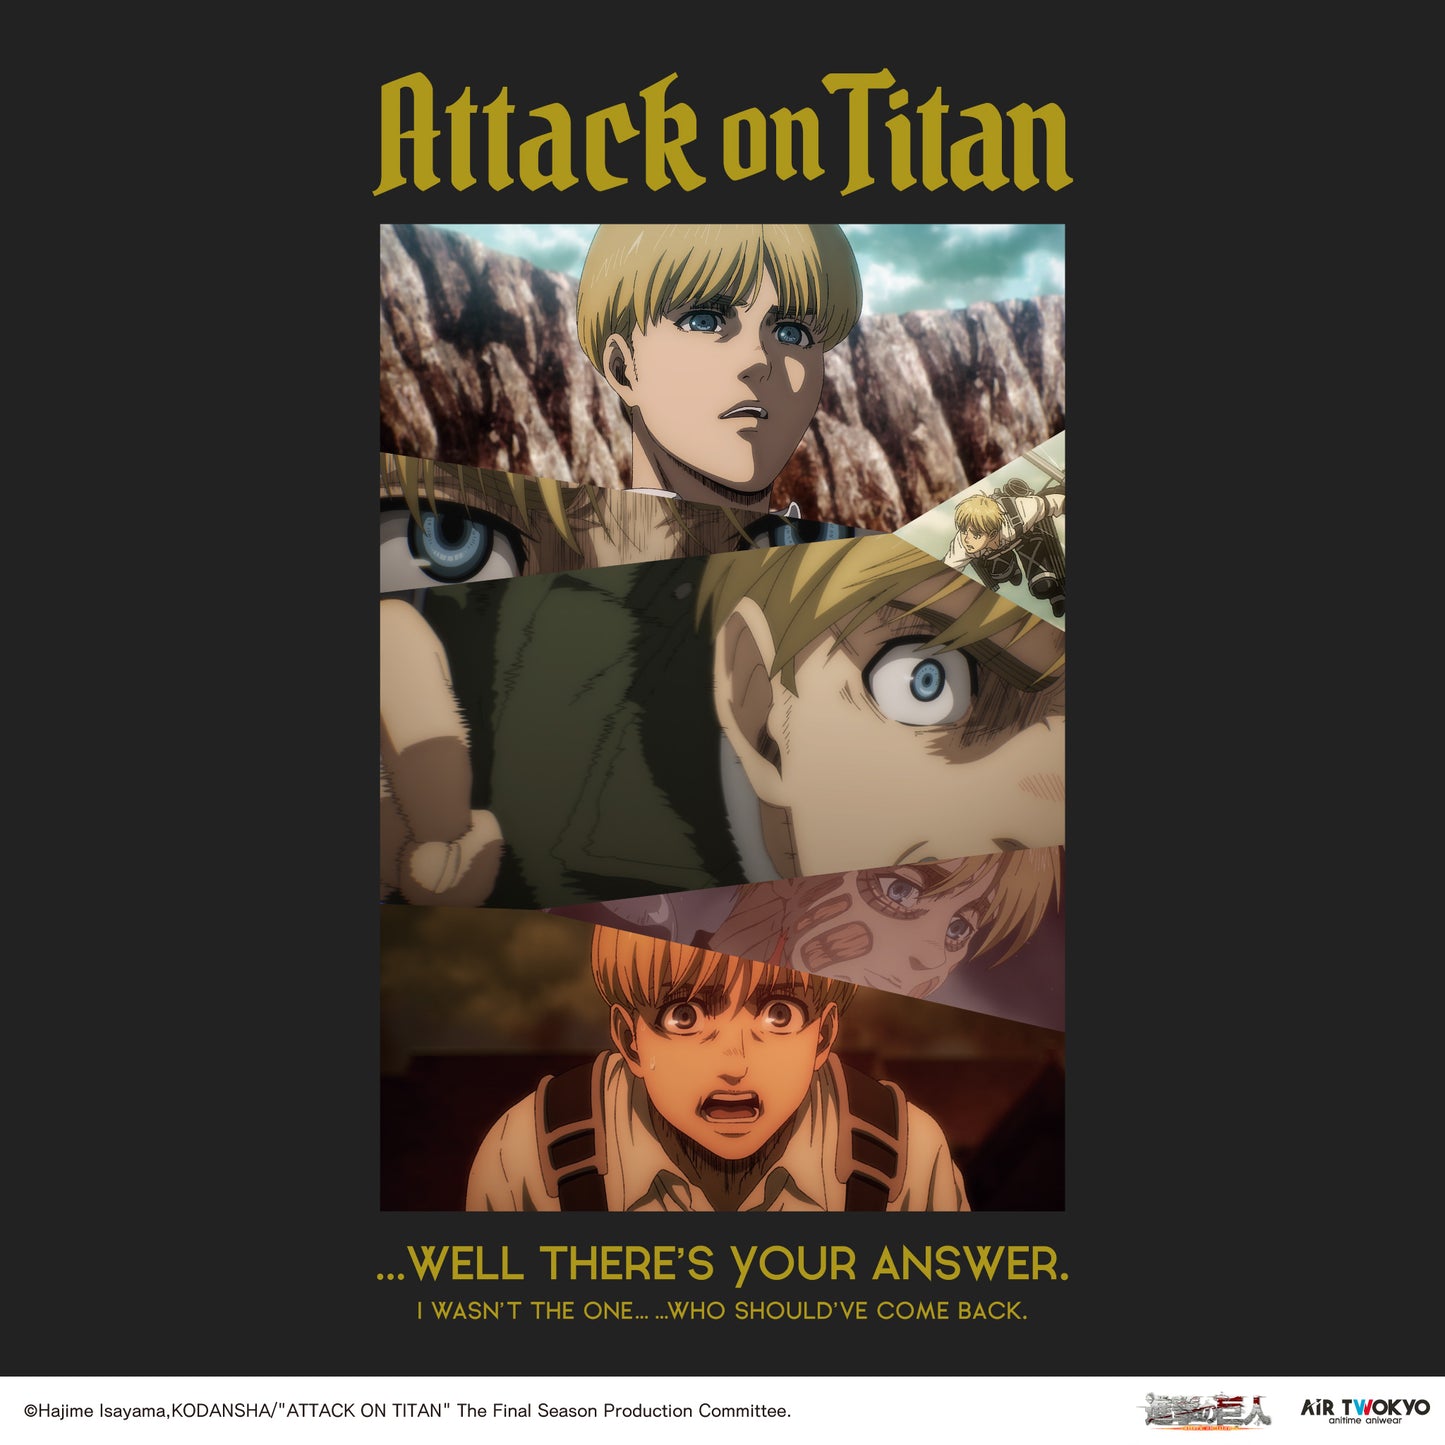 "Attack on Titan" The Final Season Collage Graphic T-shirt Armin